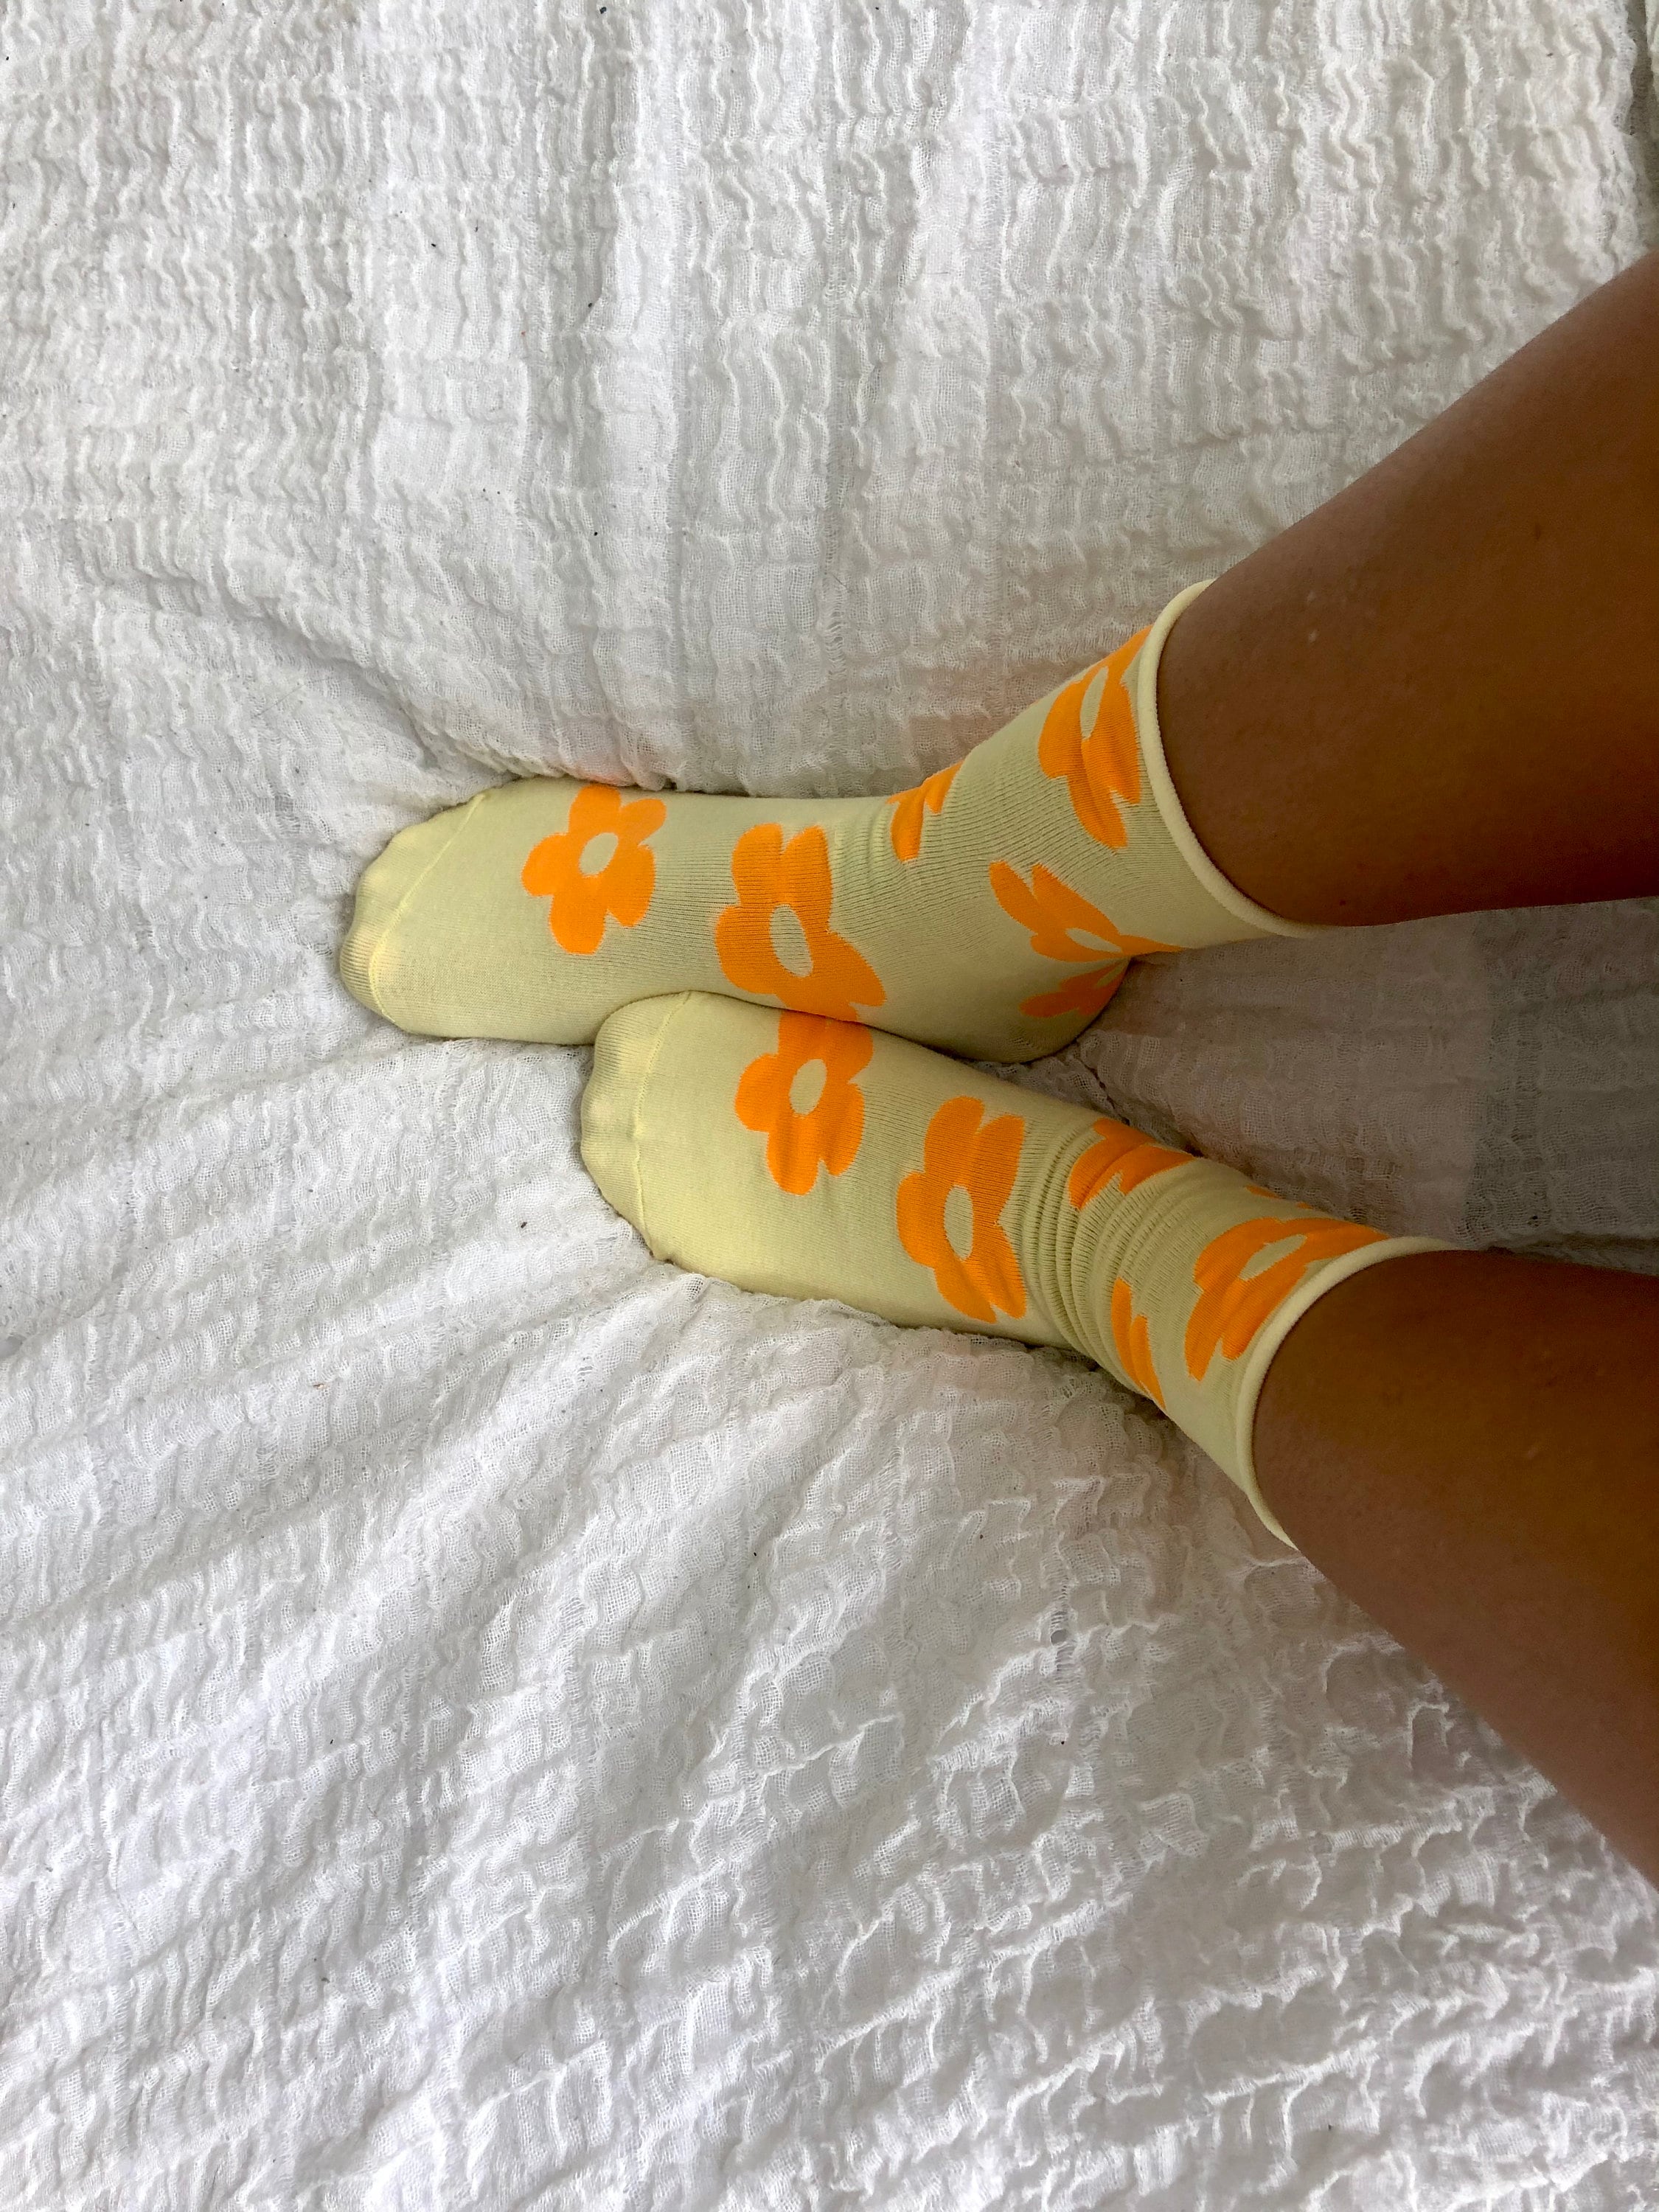 Plain Beige Cotton Socks / Heels Socks / Peep Toe / Low Cut Socks